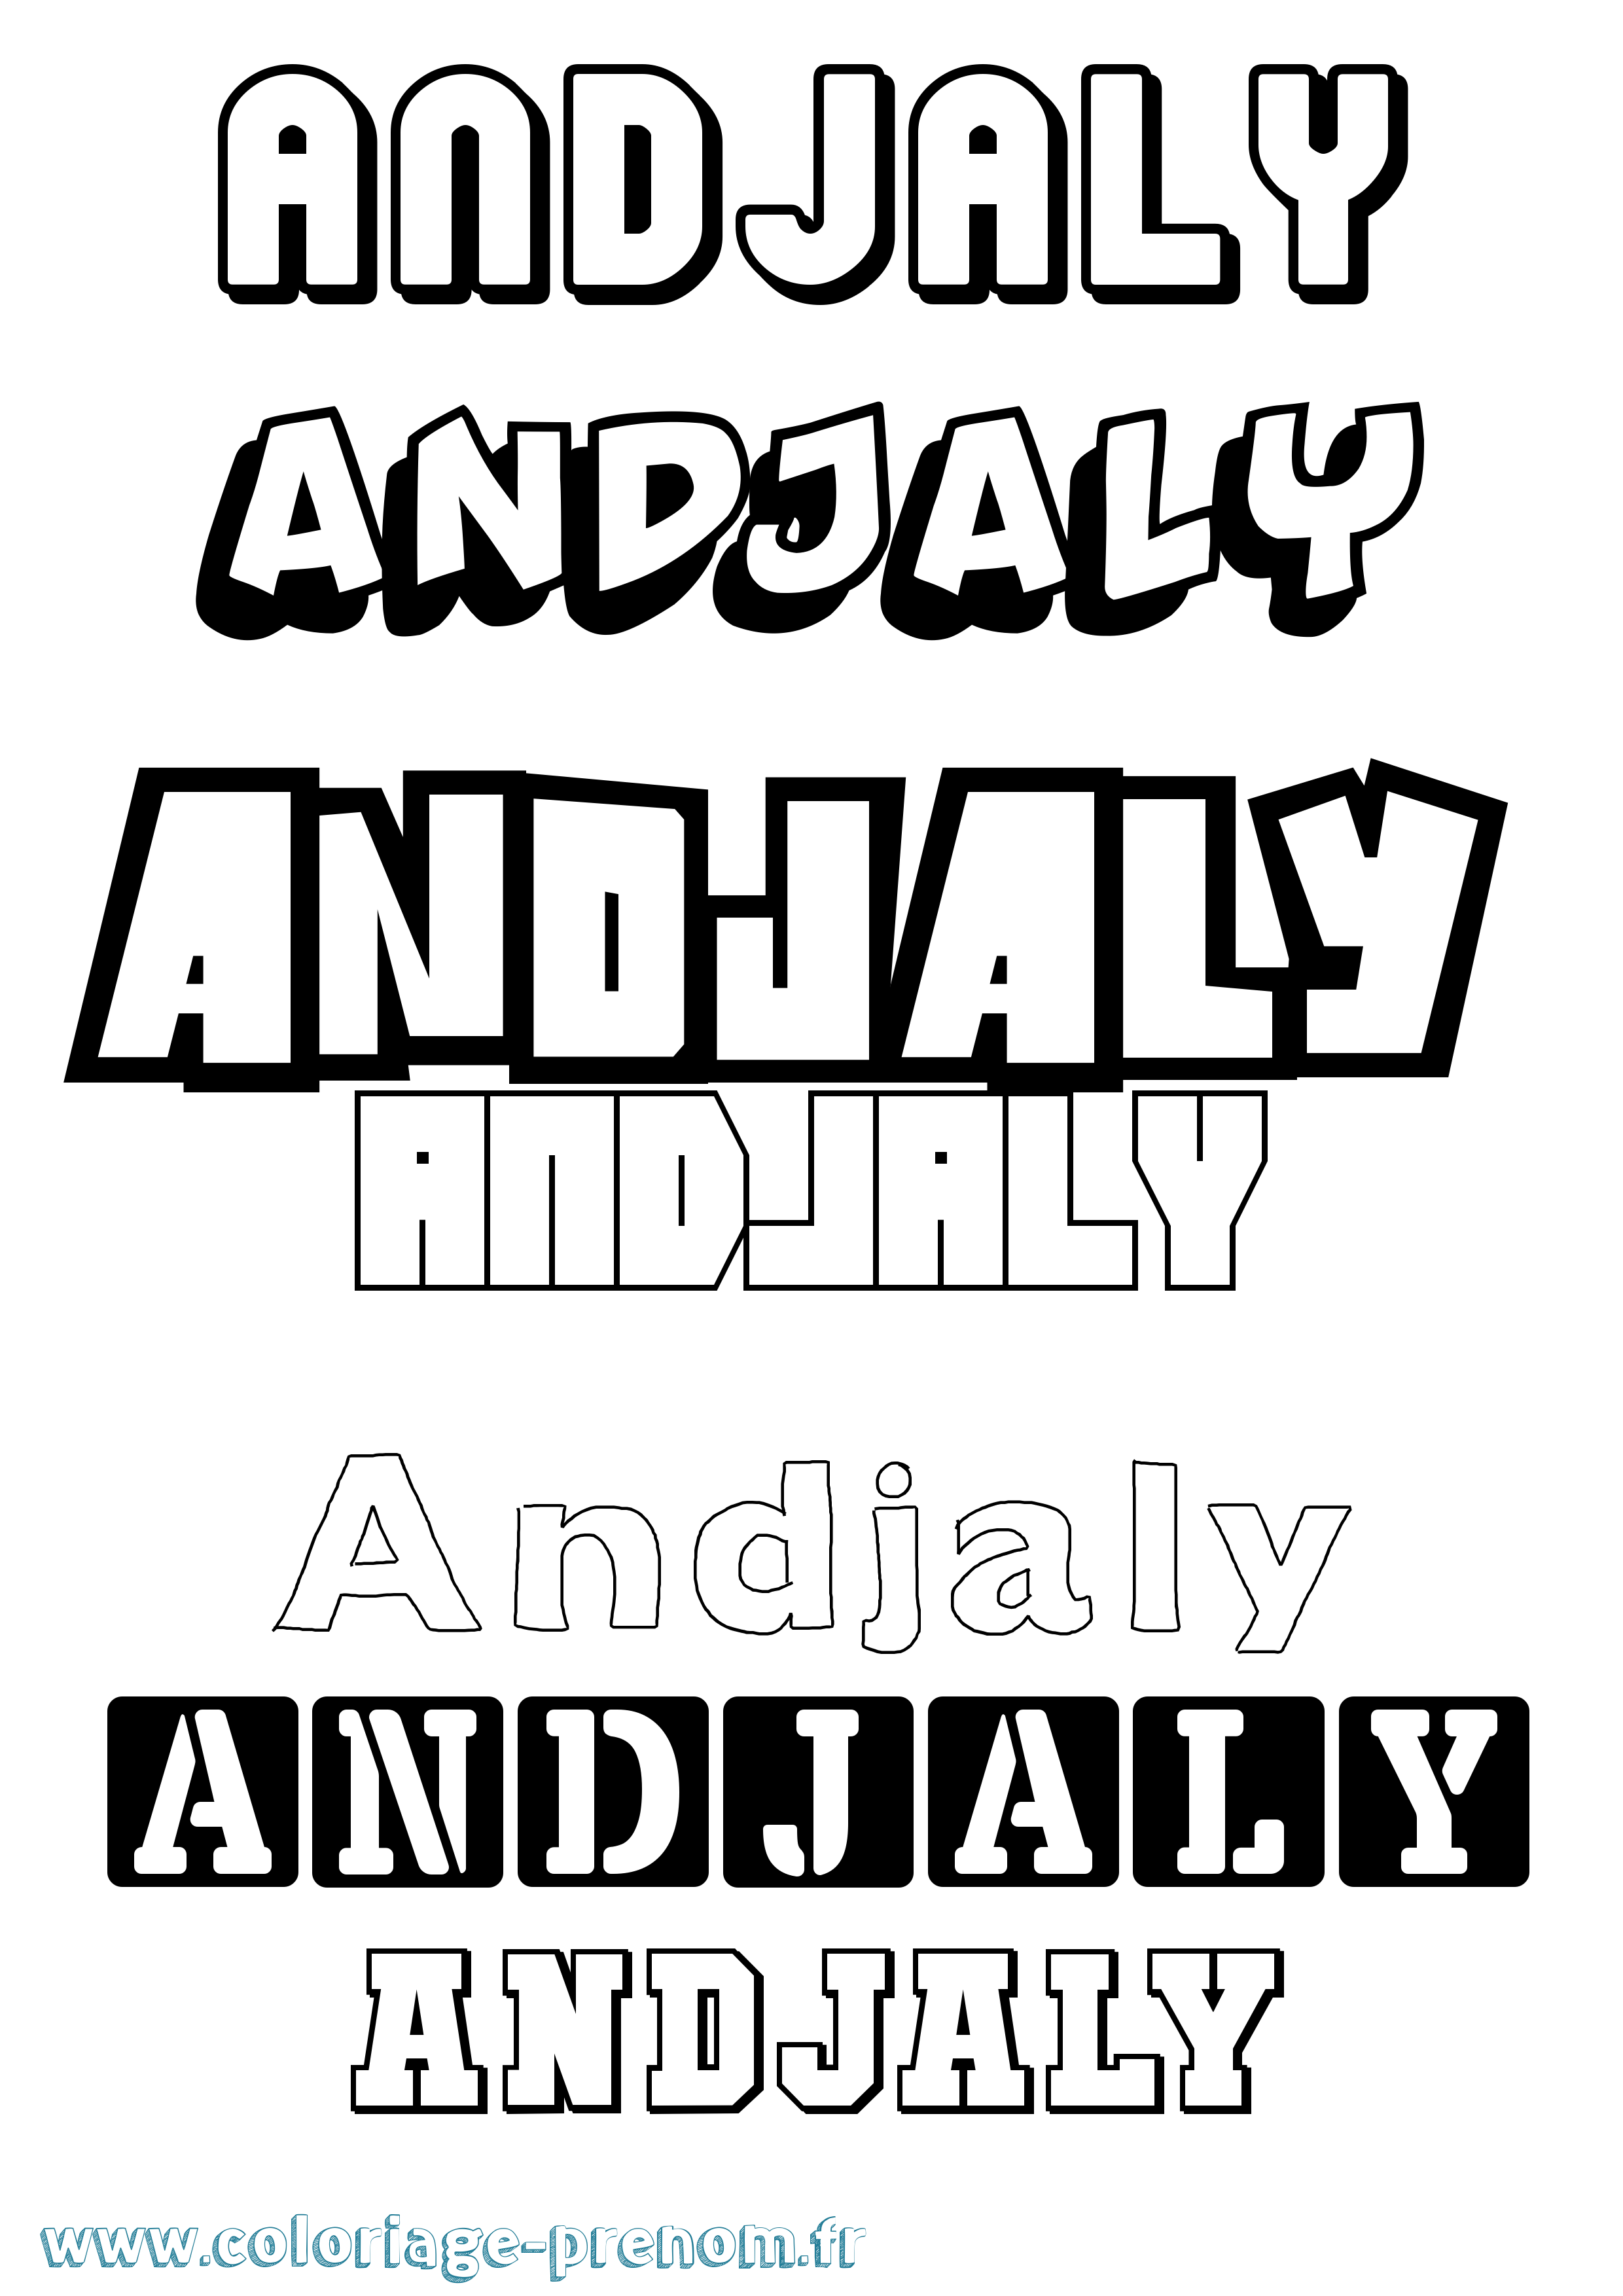 Coloriage prénom Andjaly Simple